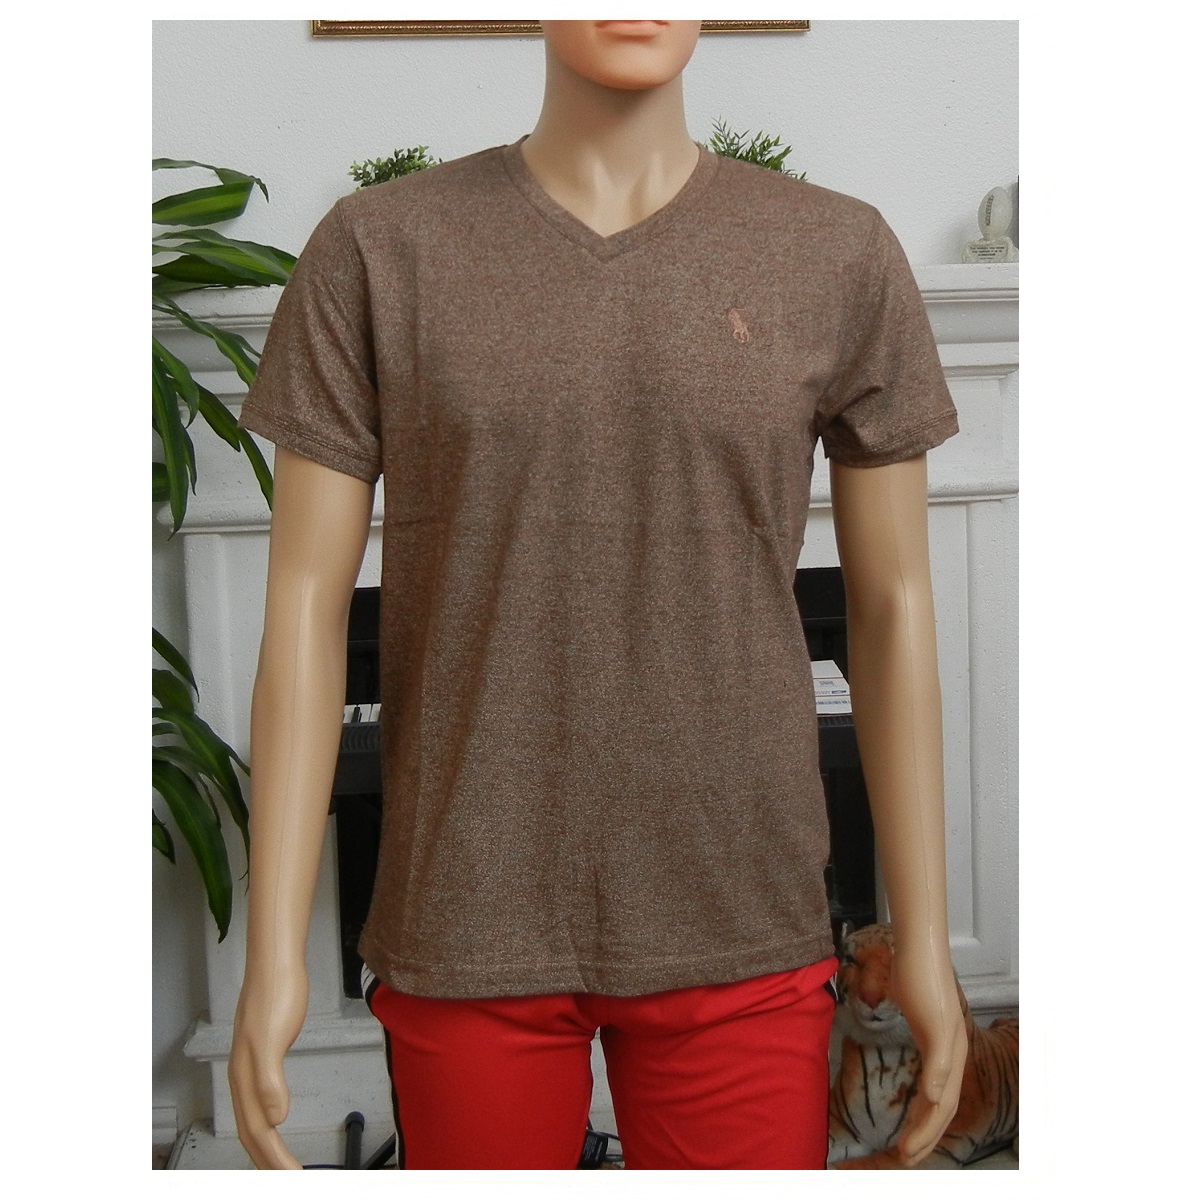 Men's T-Shirt, Short Sleeve V-Neck Cotton T-Shirt Basic Plain T-Shirt for men, Heather Brown